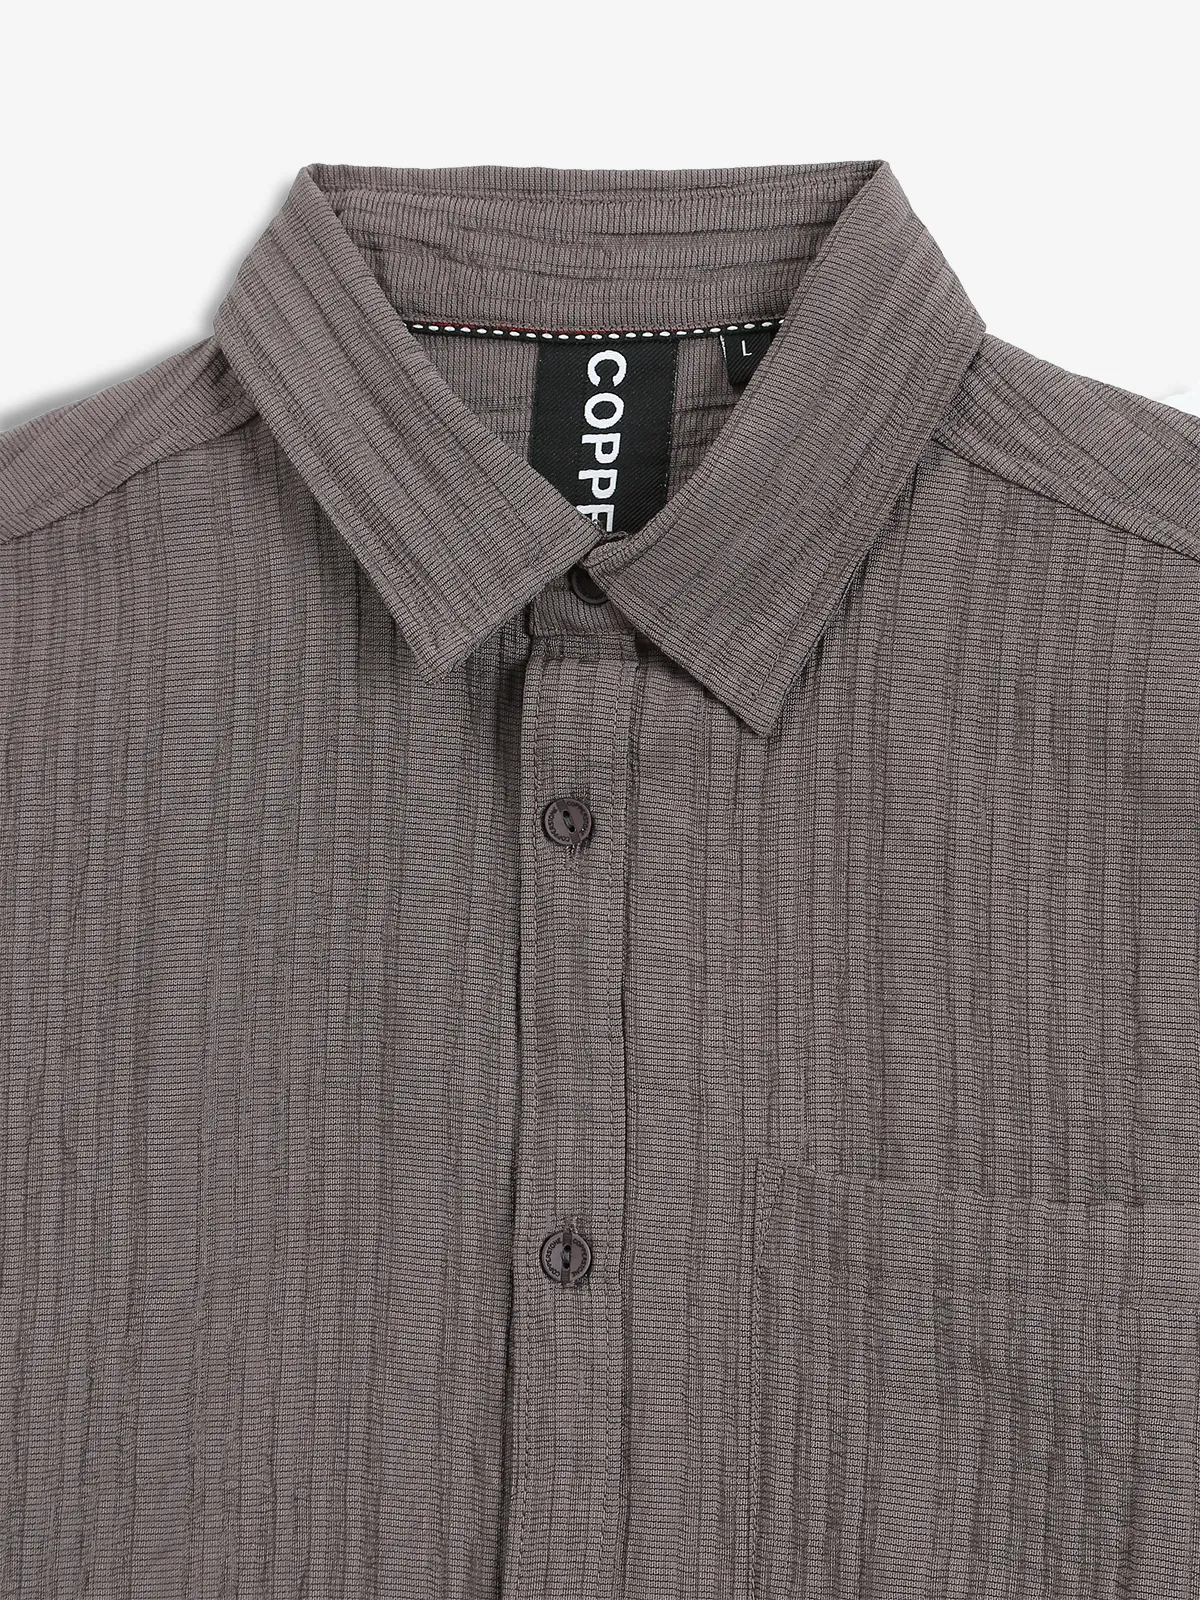 COPPER STONE stripe grey slim fit shirt